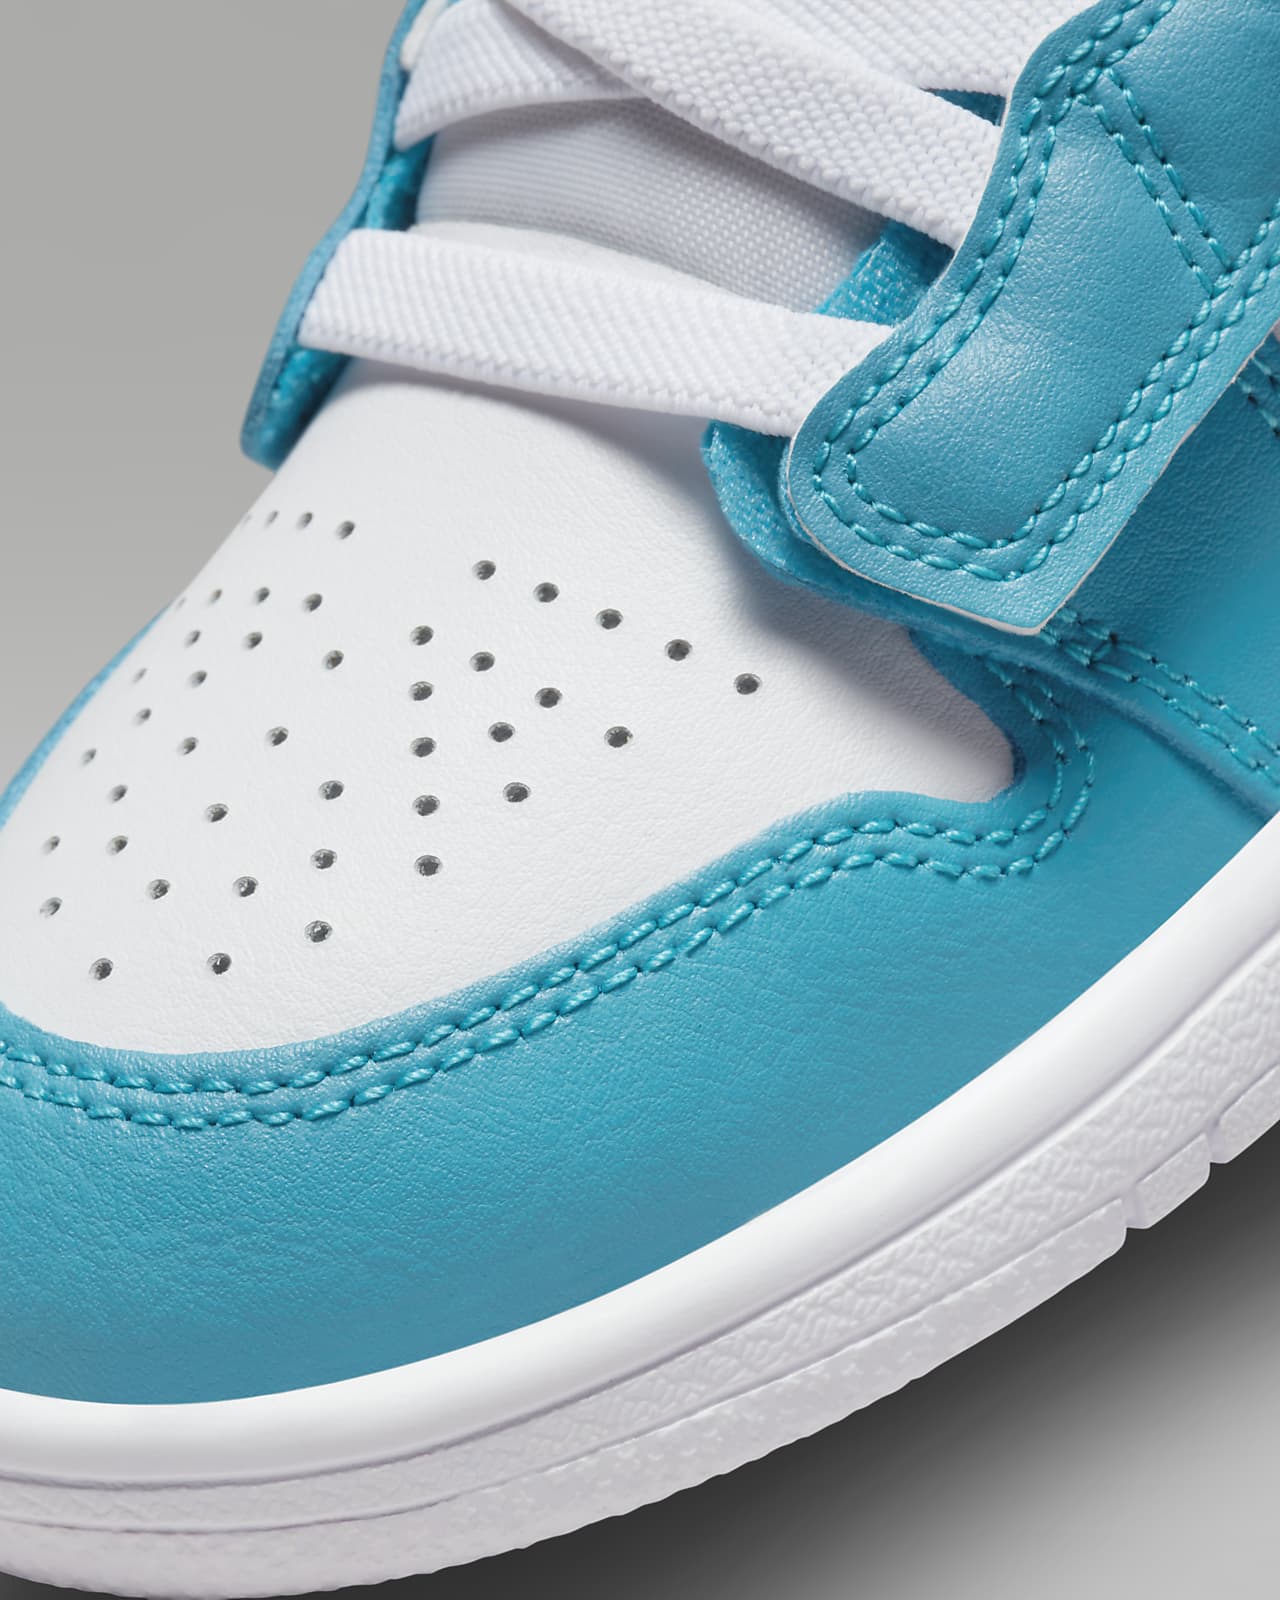 Tenis para niña, 16 cm, Nike Jordan - Kinder Market